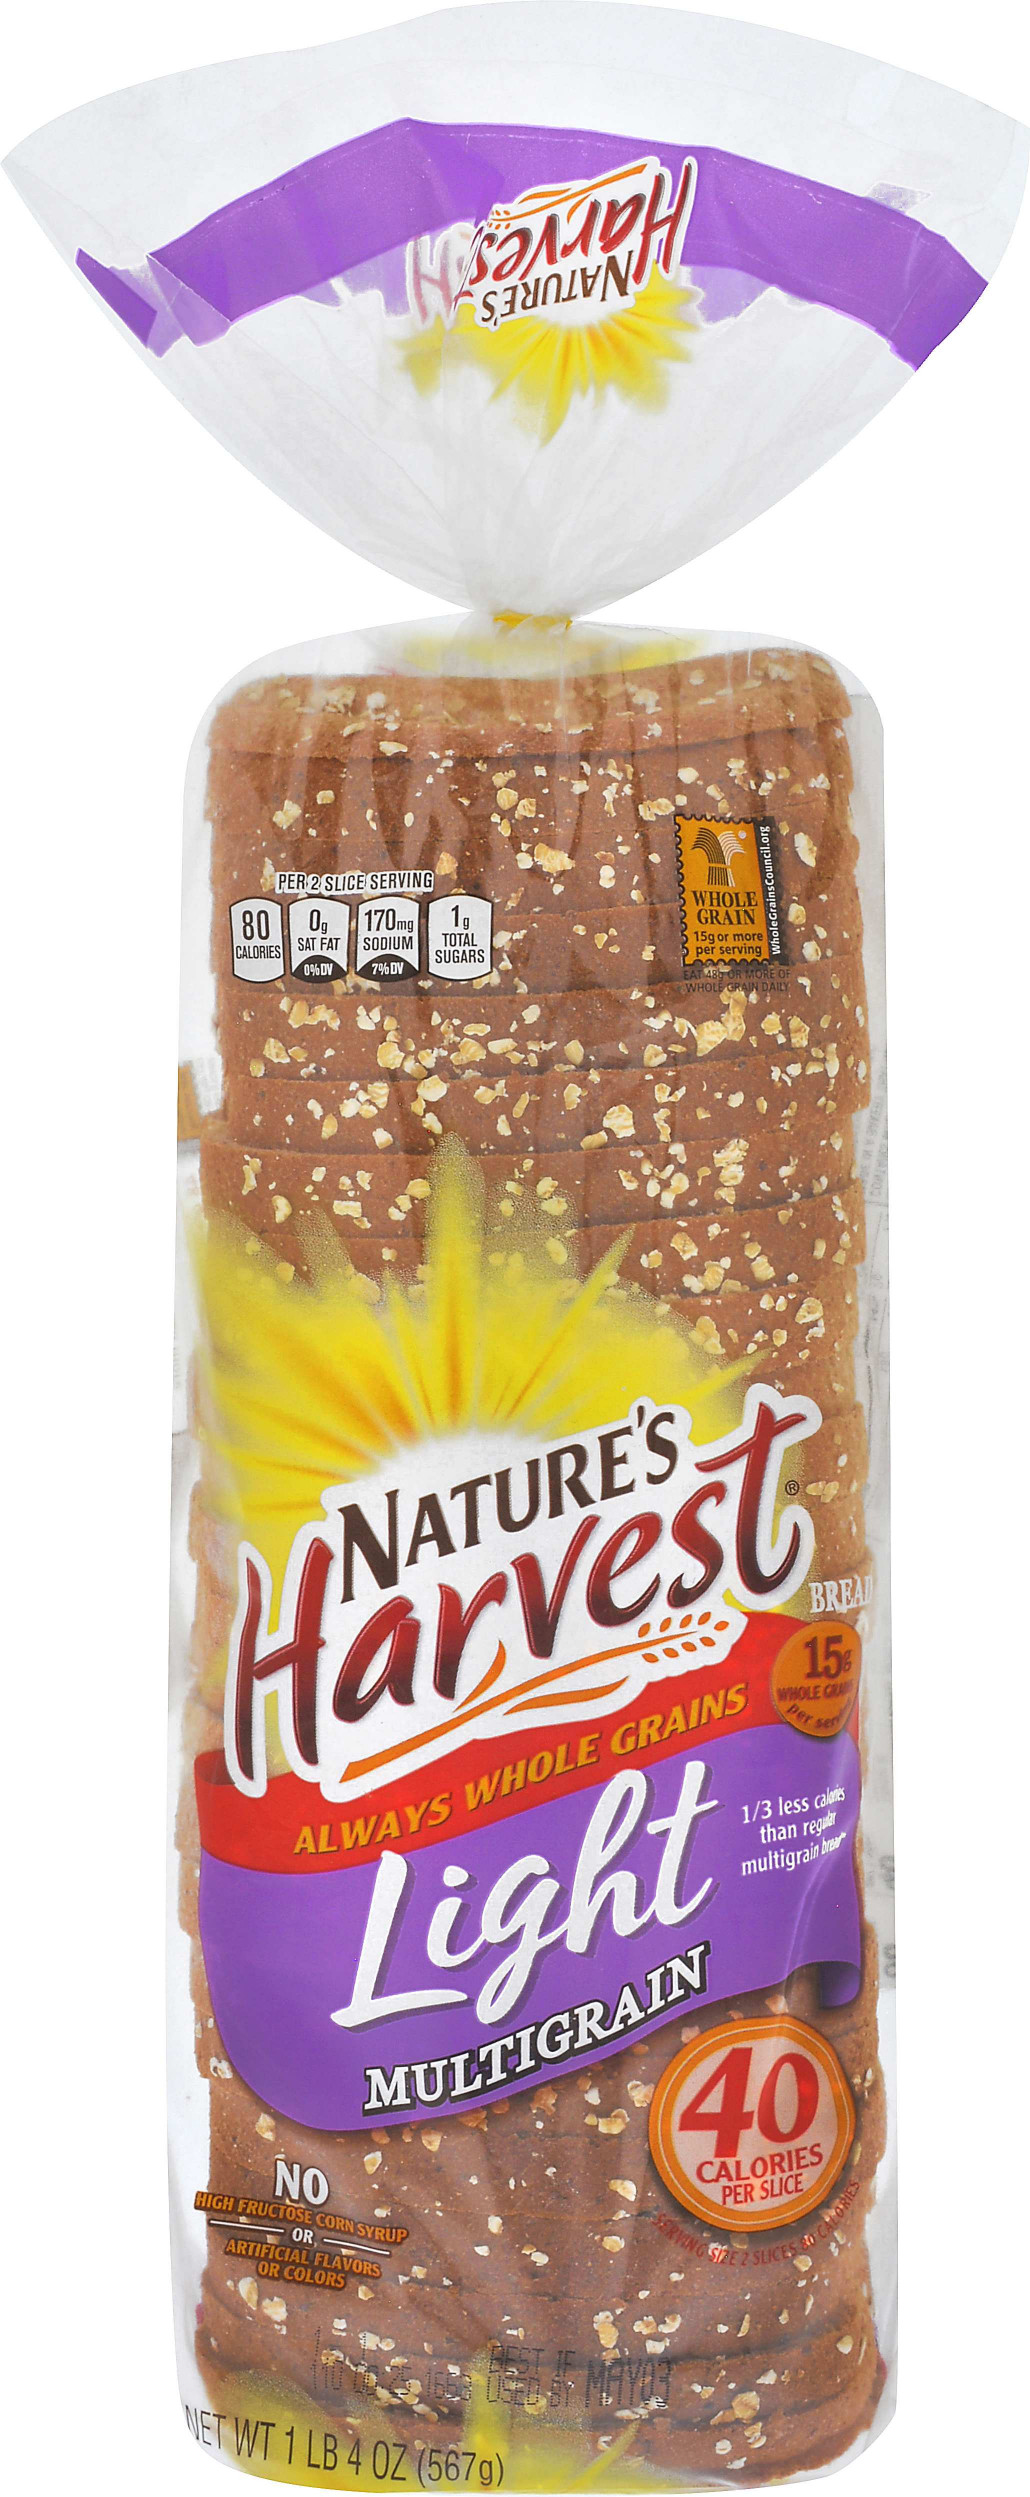 harvest bread